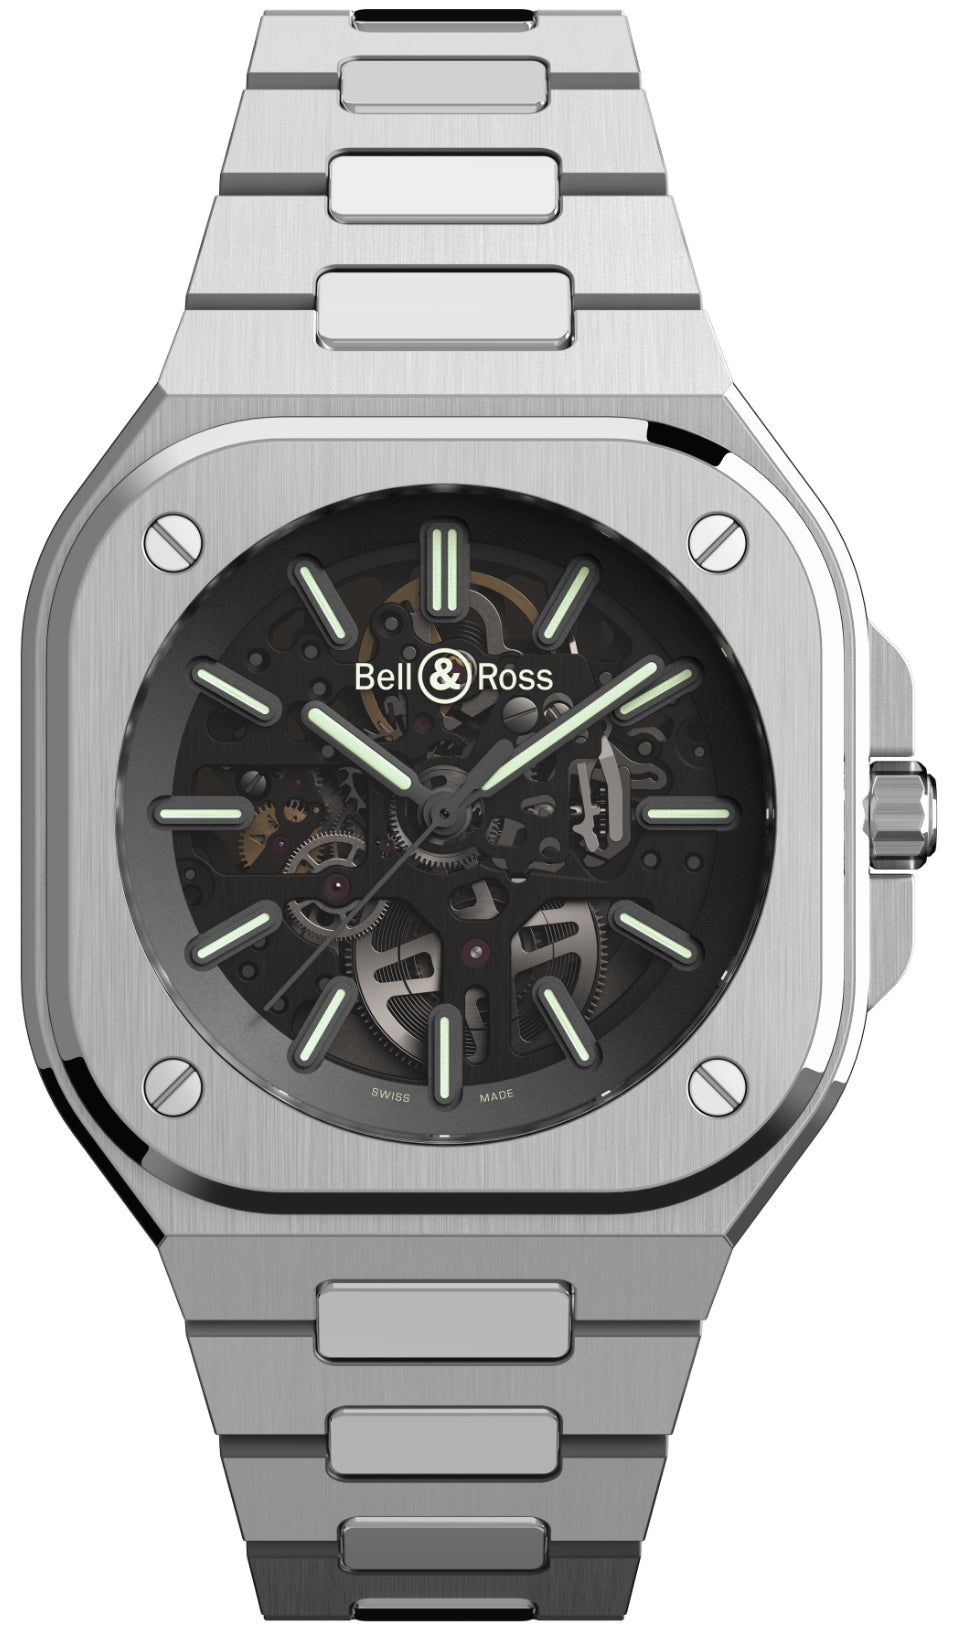 BellandRoss Watch Br 05 Skeleton Nightlum Bracelet Limited Edition